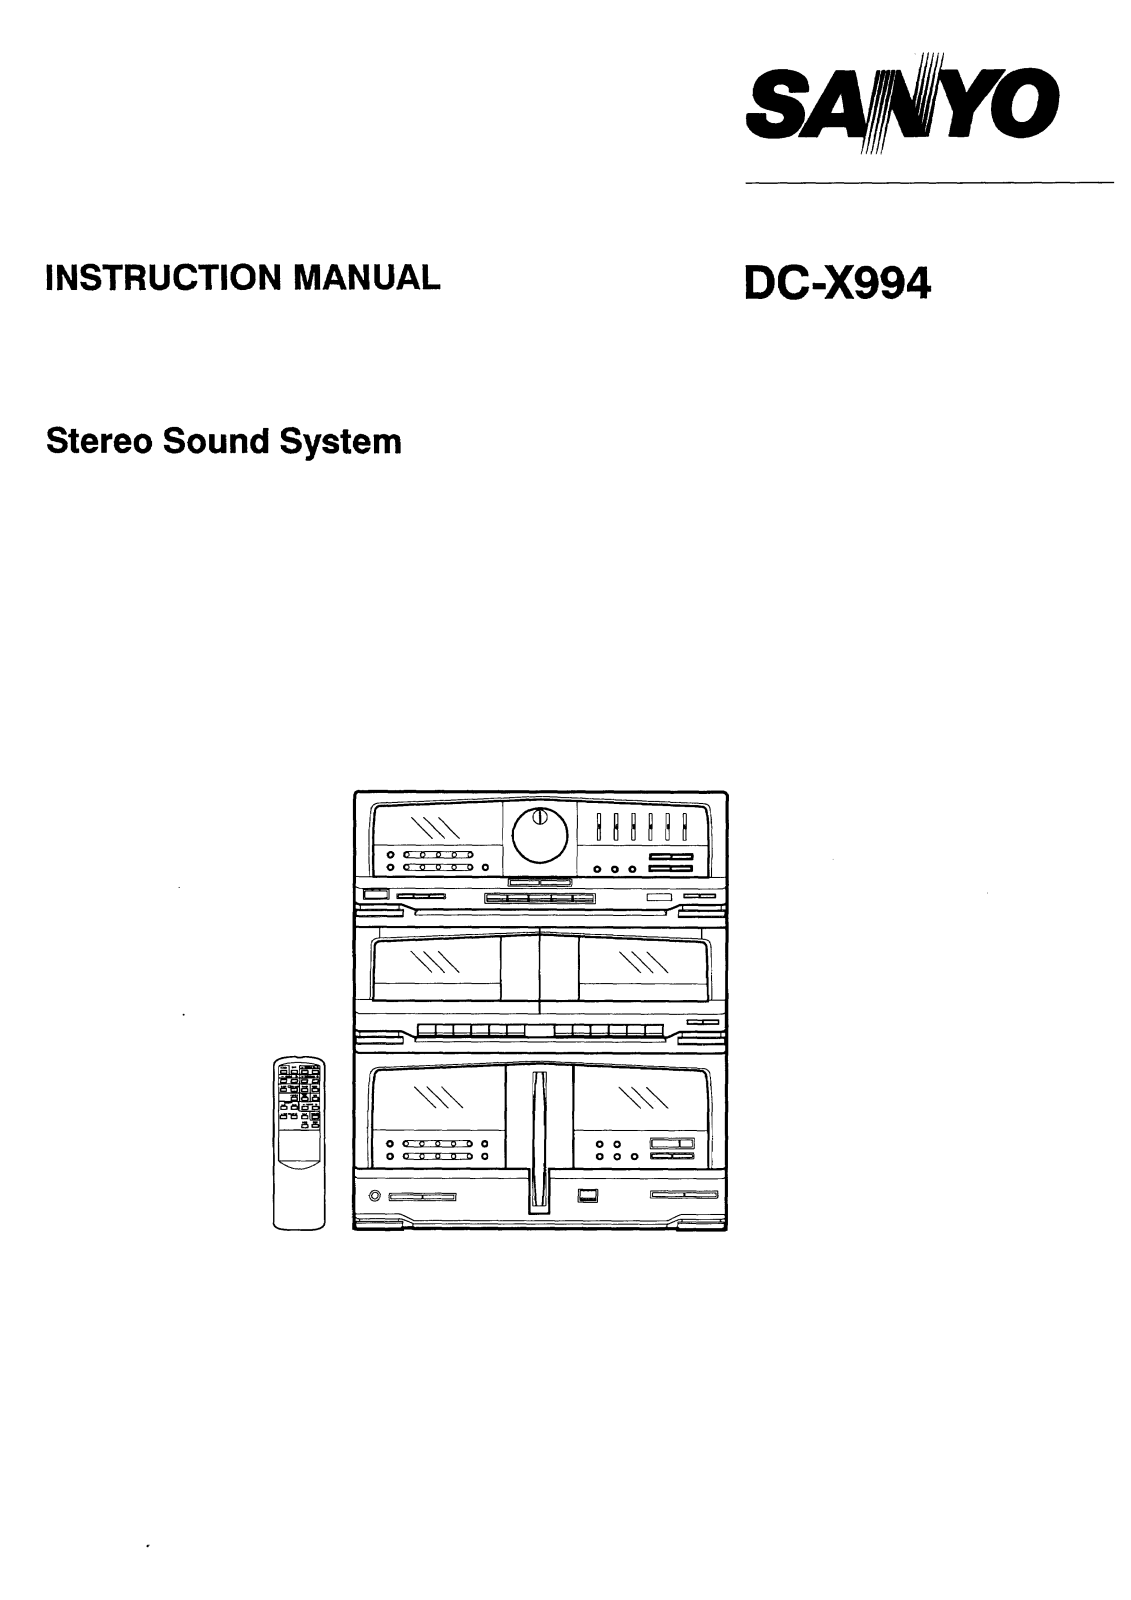 Sanyo DC-X994 Instruction Manual